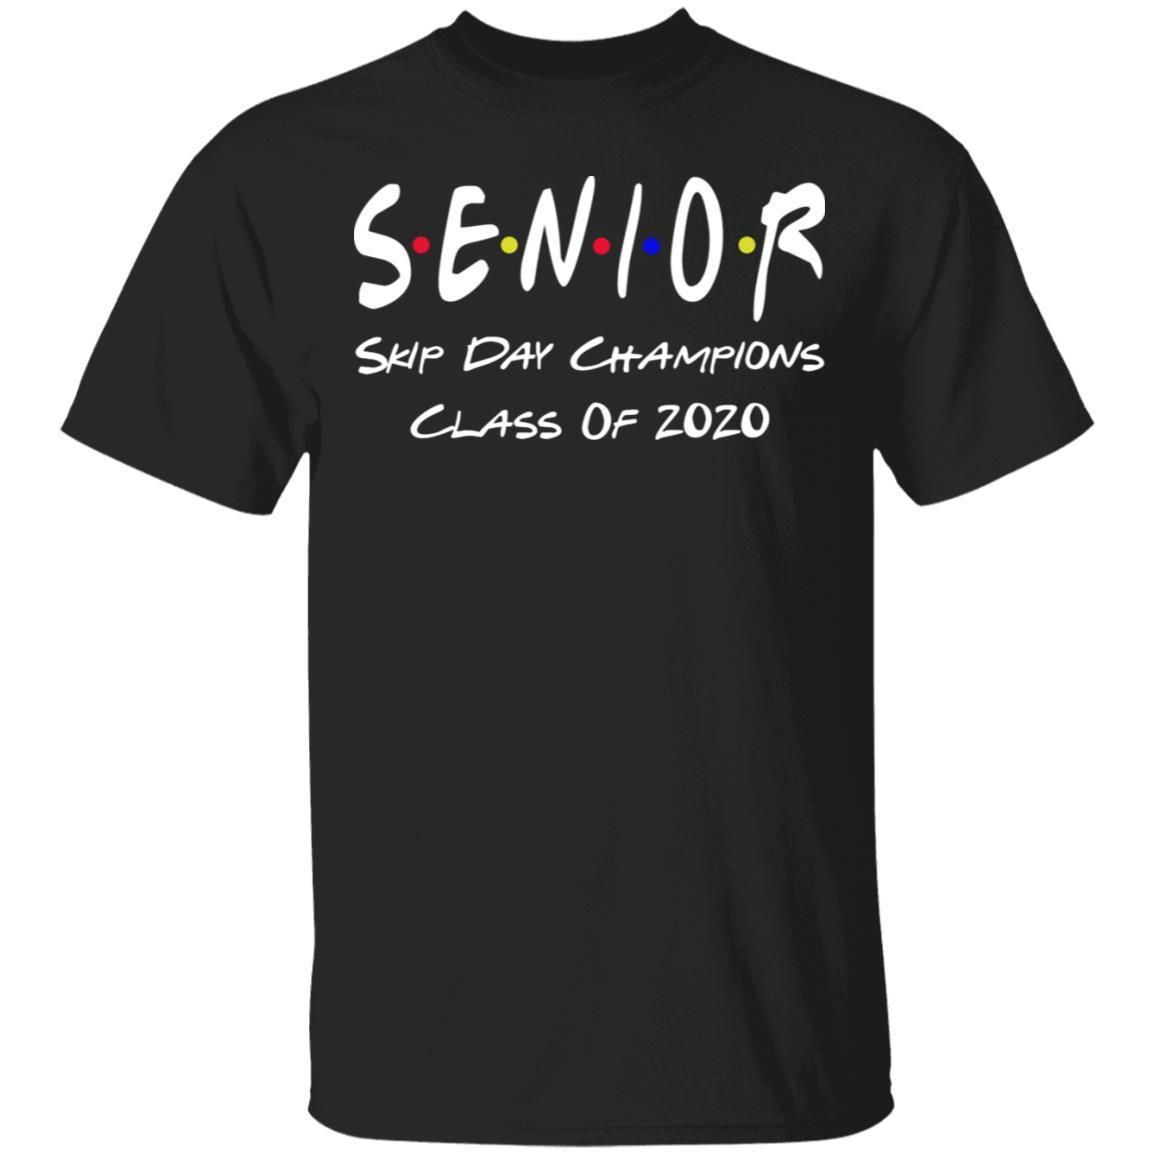 Senior Skip Day Champions Class Of 2020 shirts